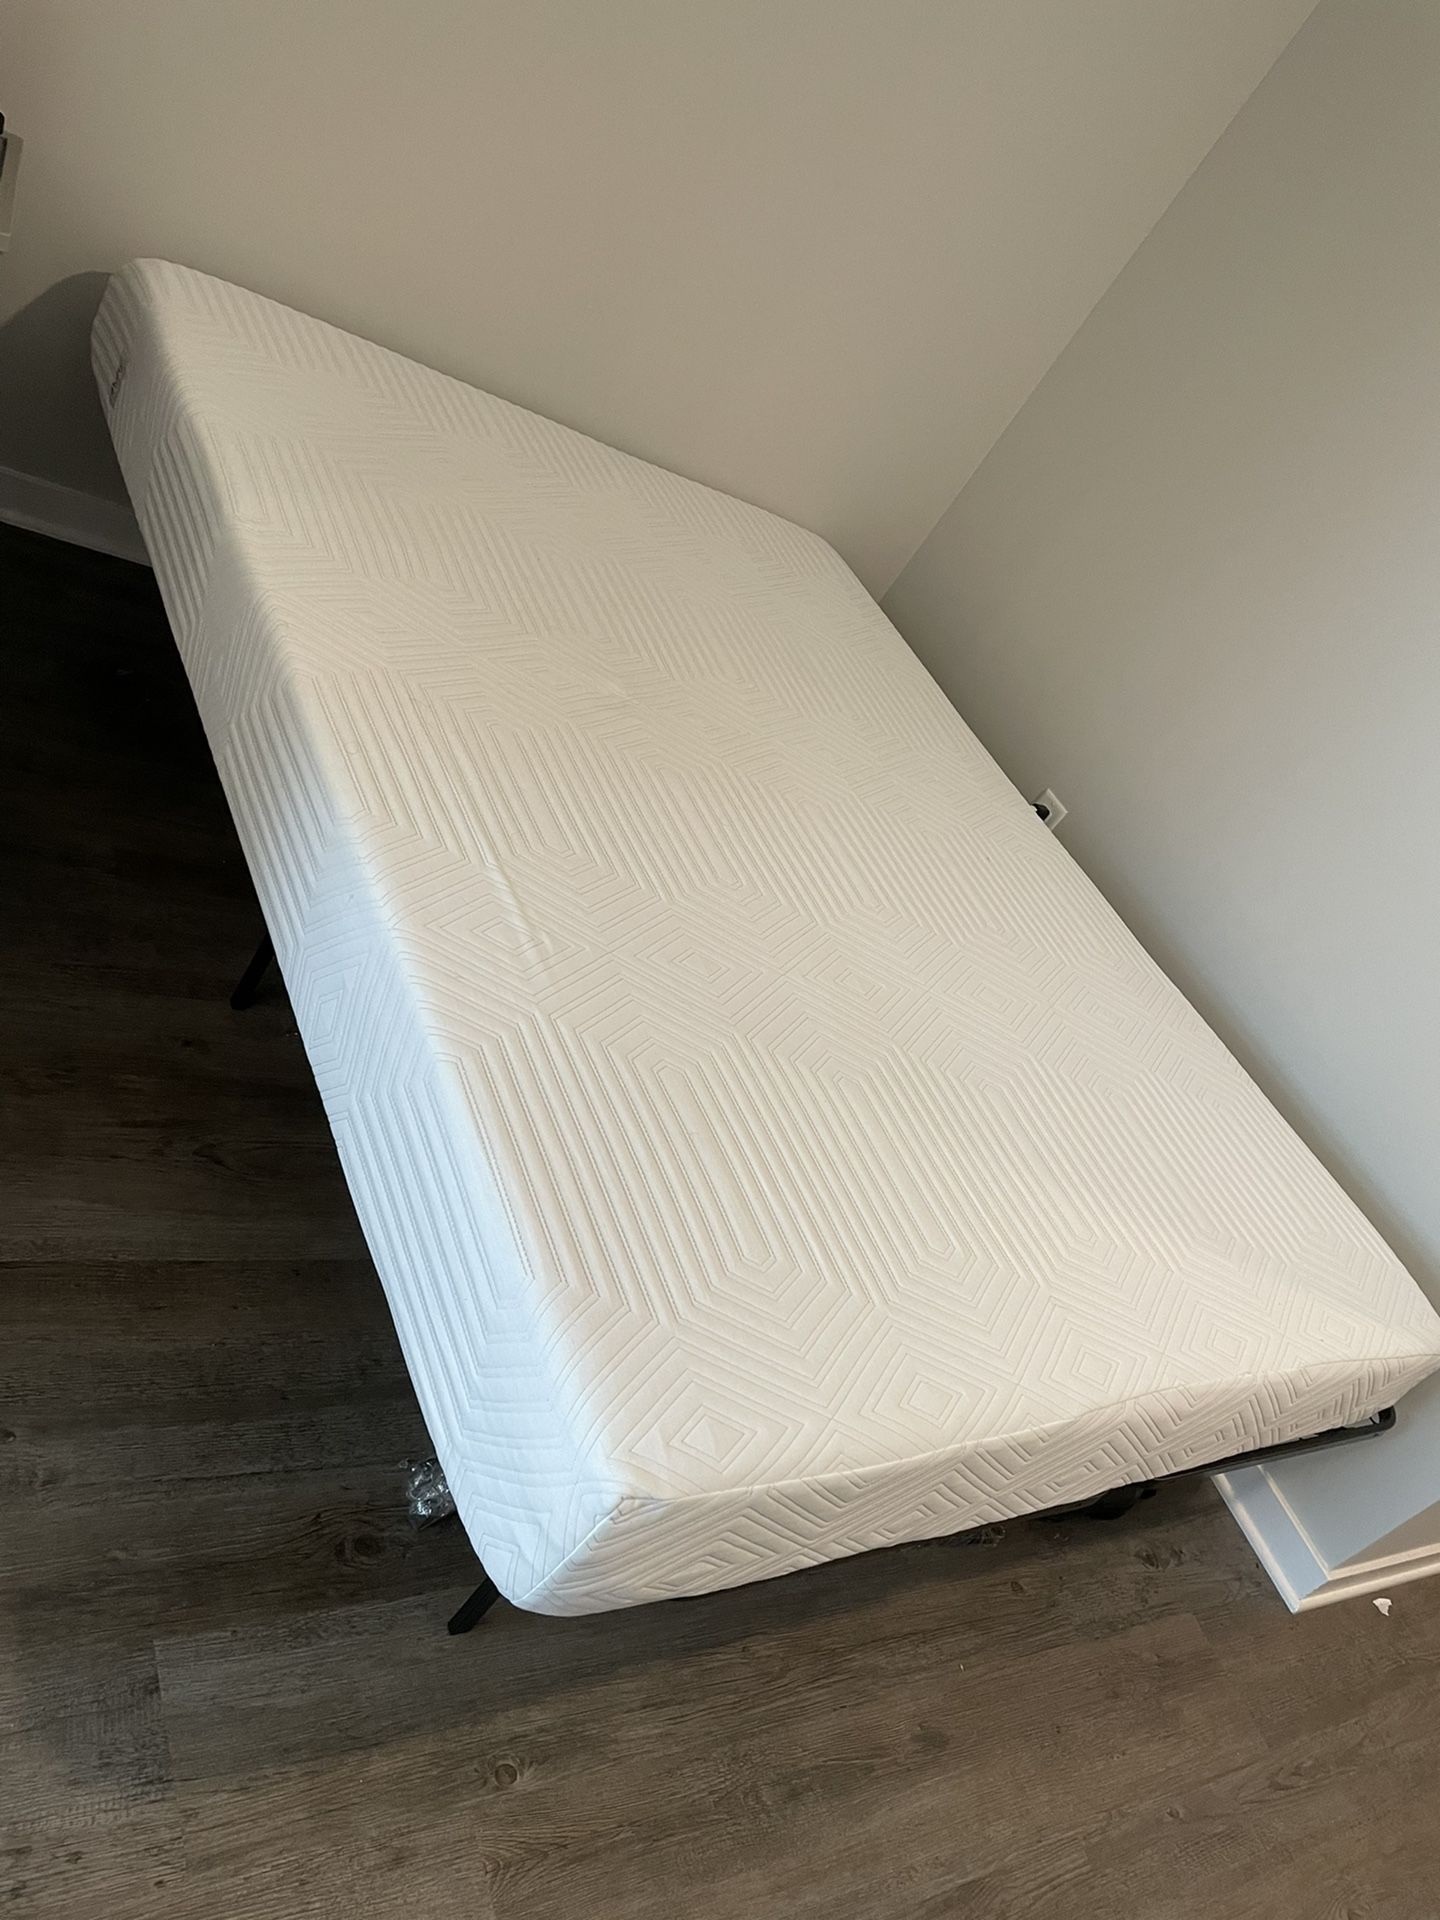 Queen size mattress + frame, less than 1yr old!